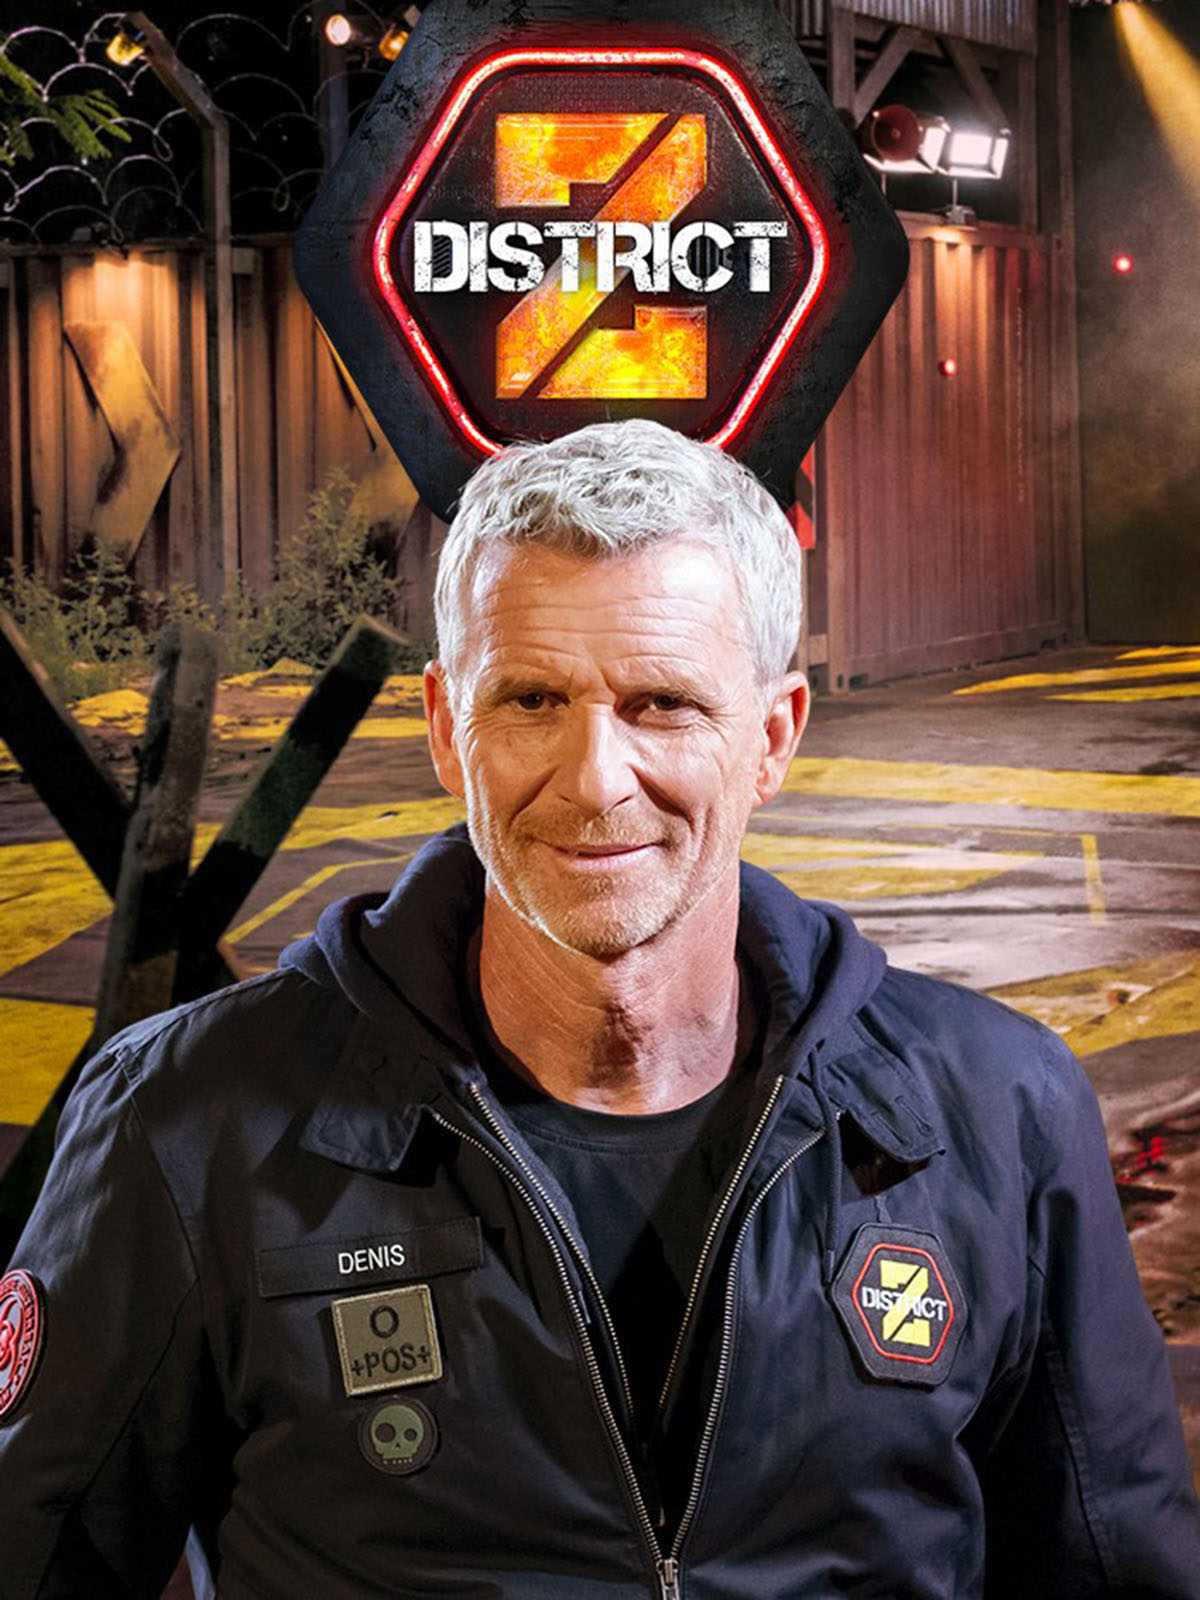 District 2